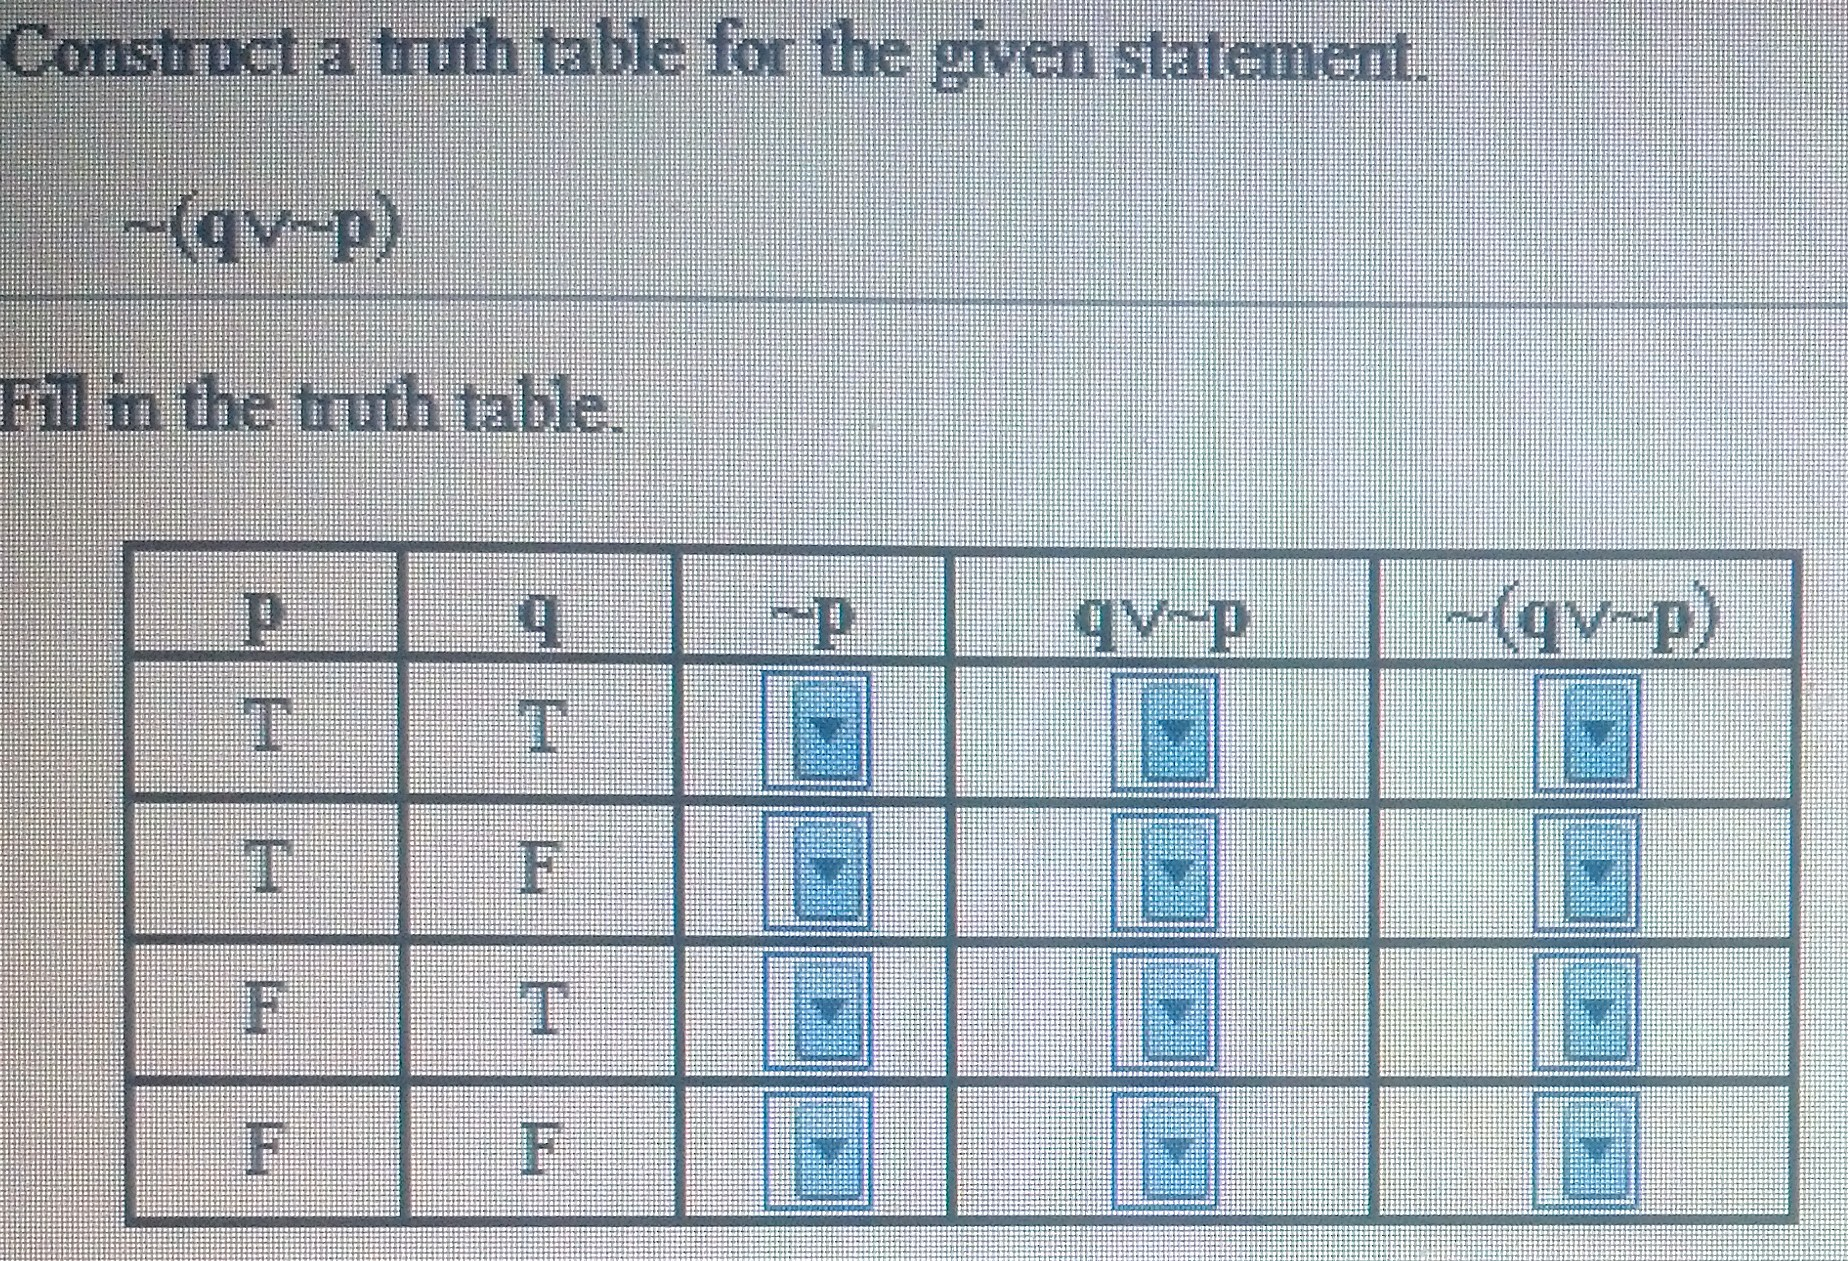 truth tables calculator